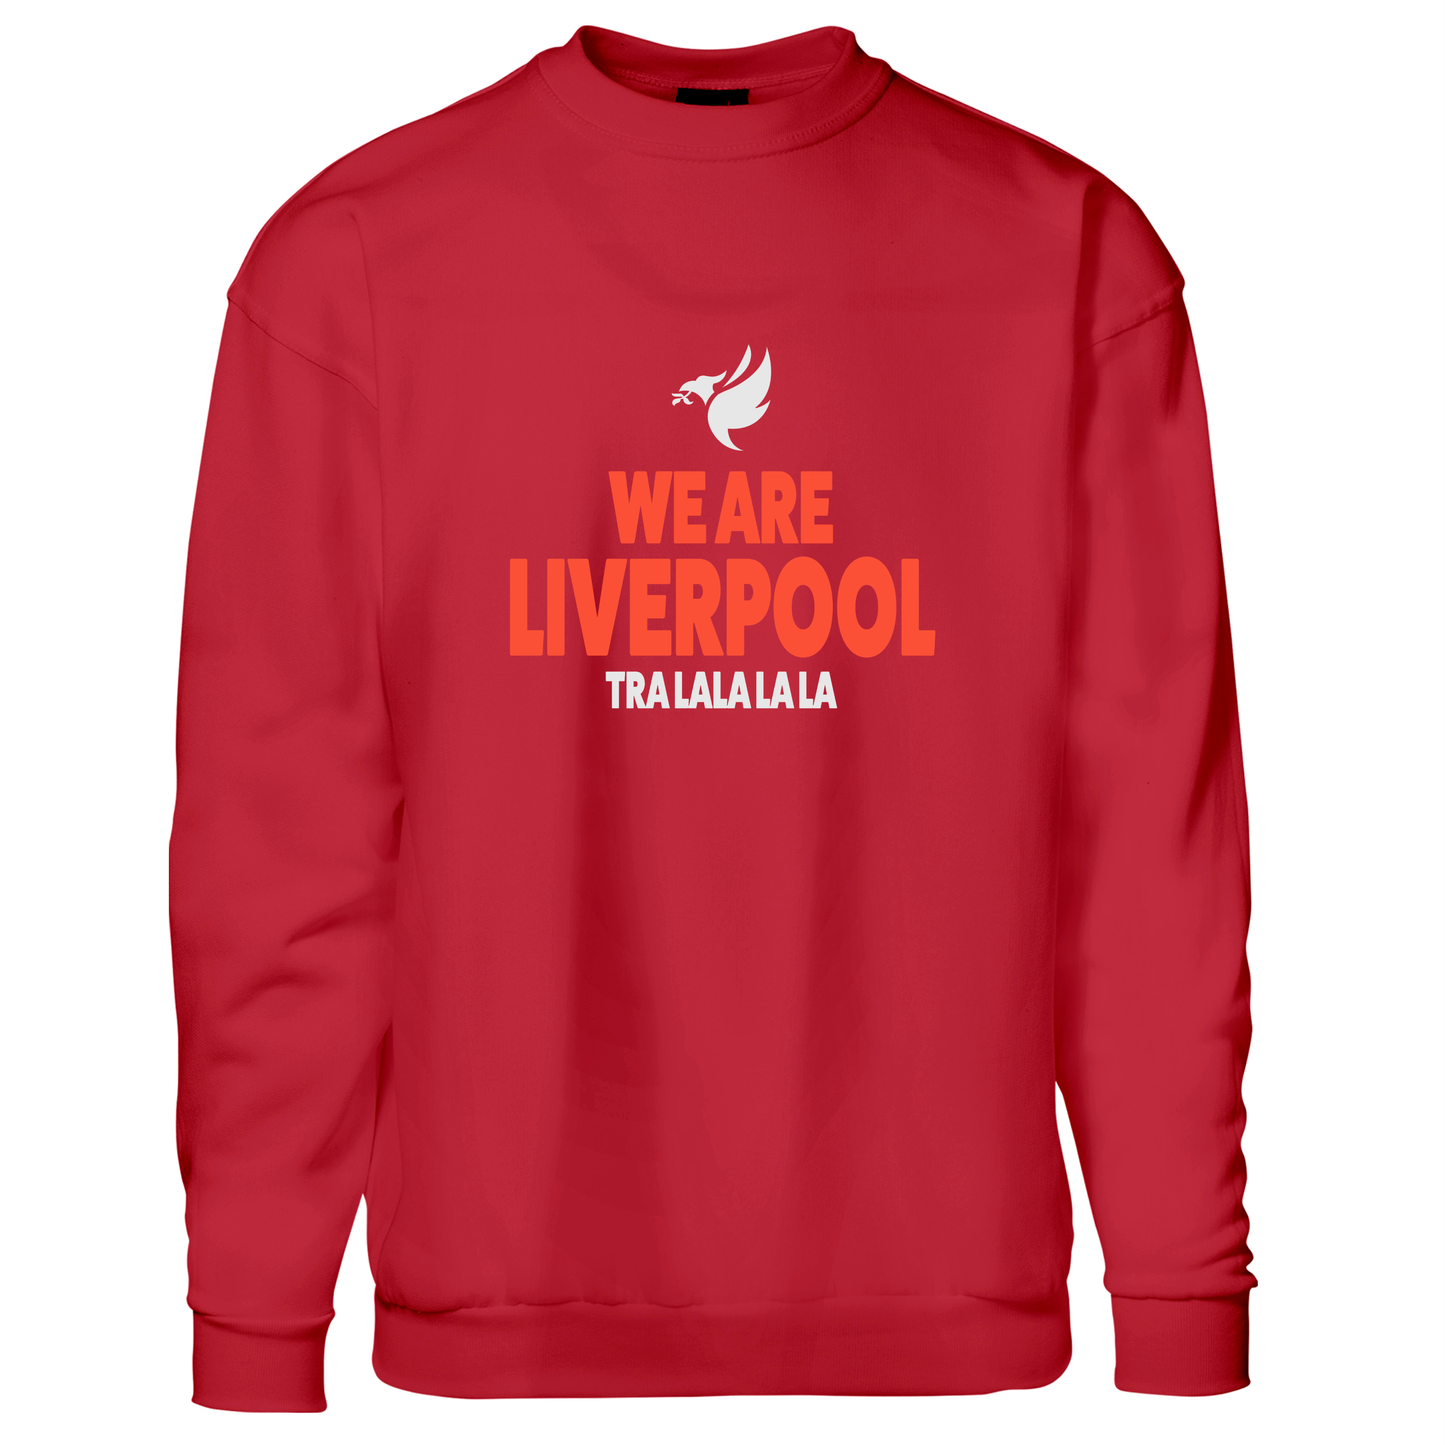 We are liverpool - Sweatshirt